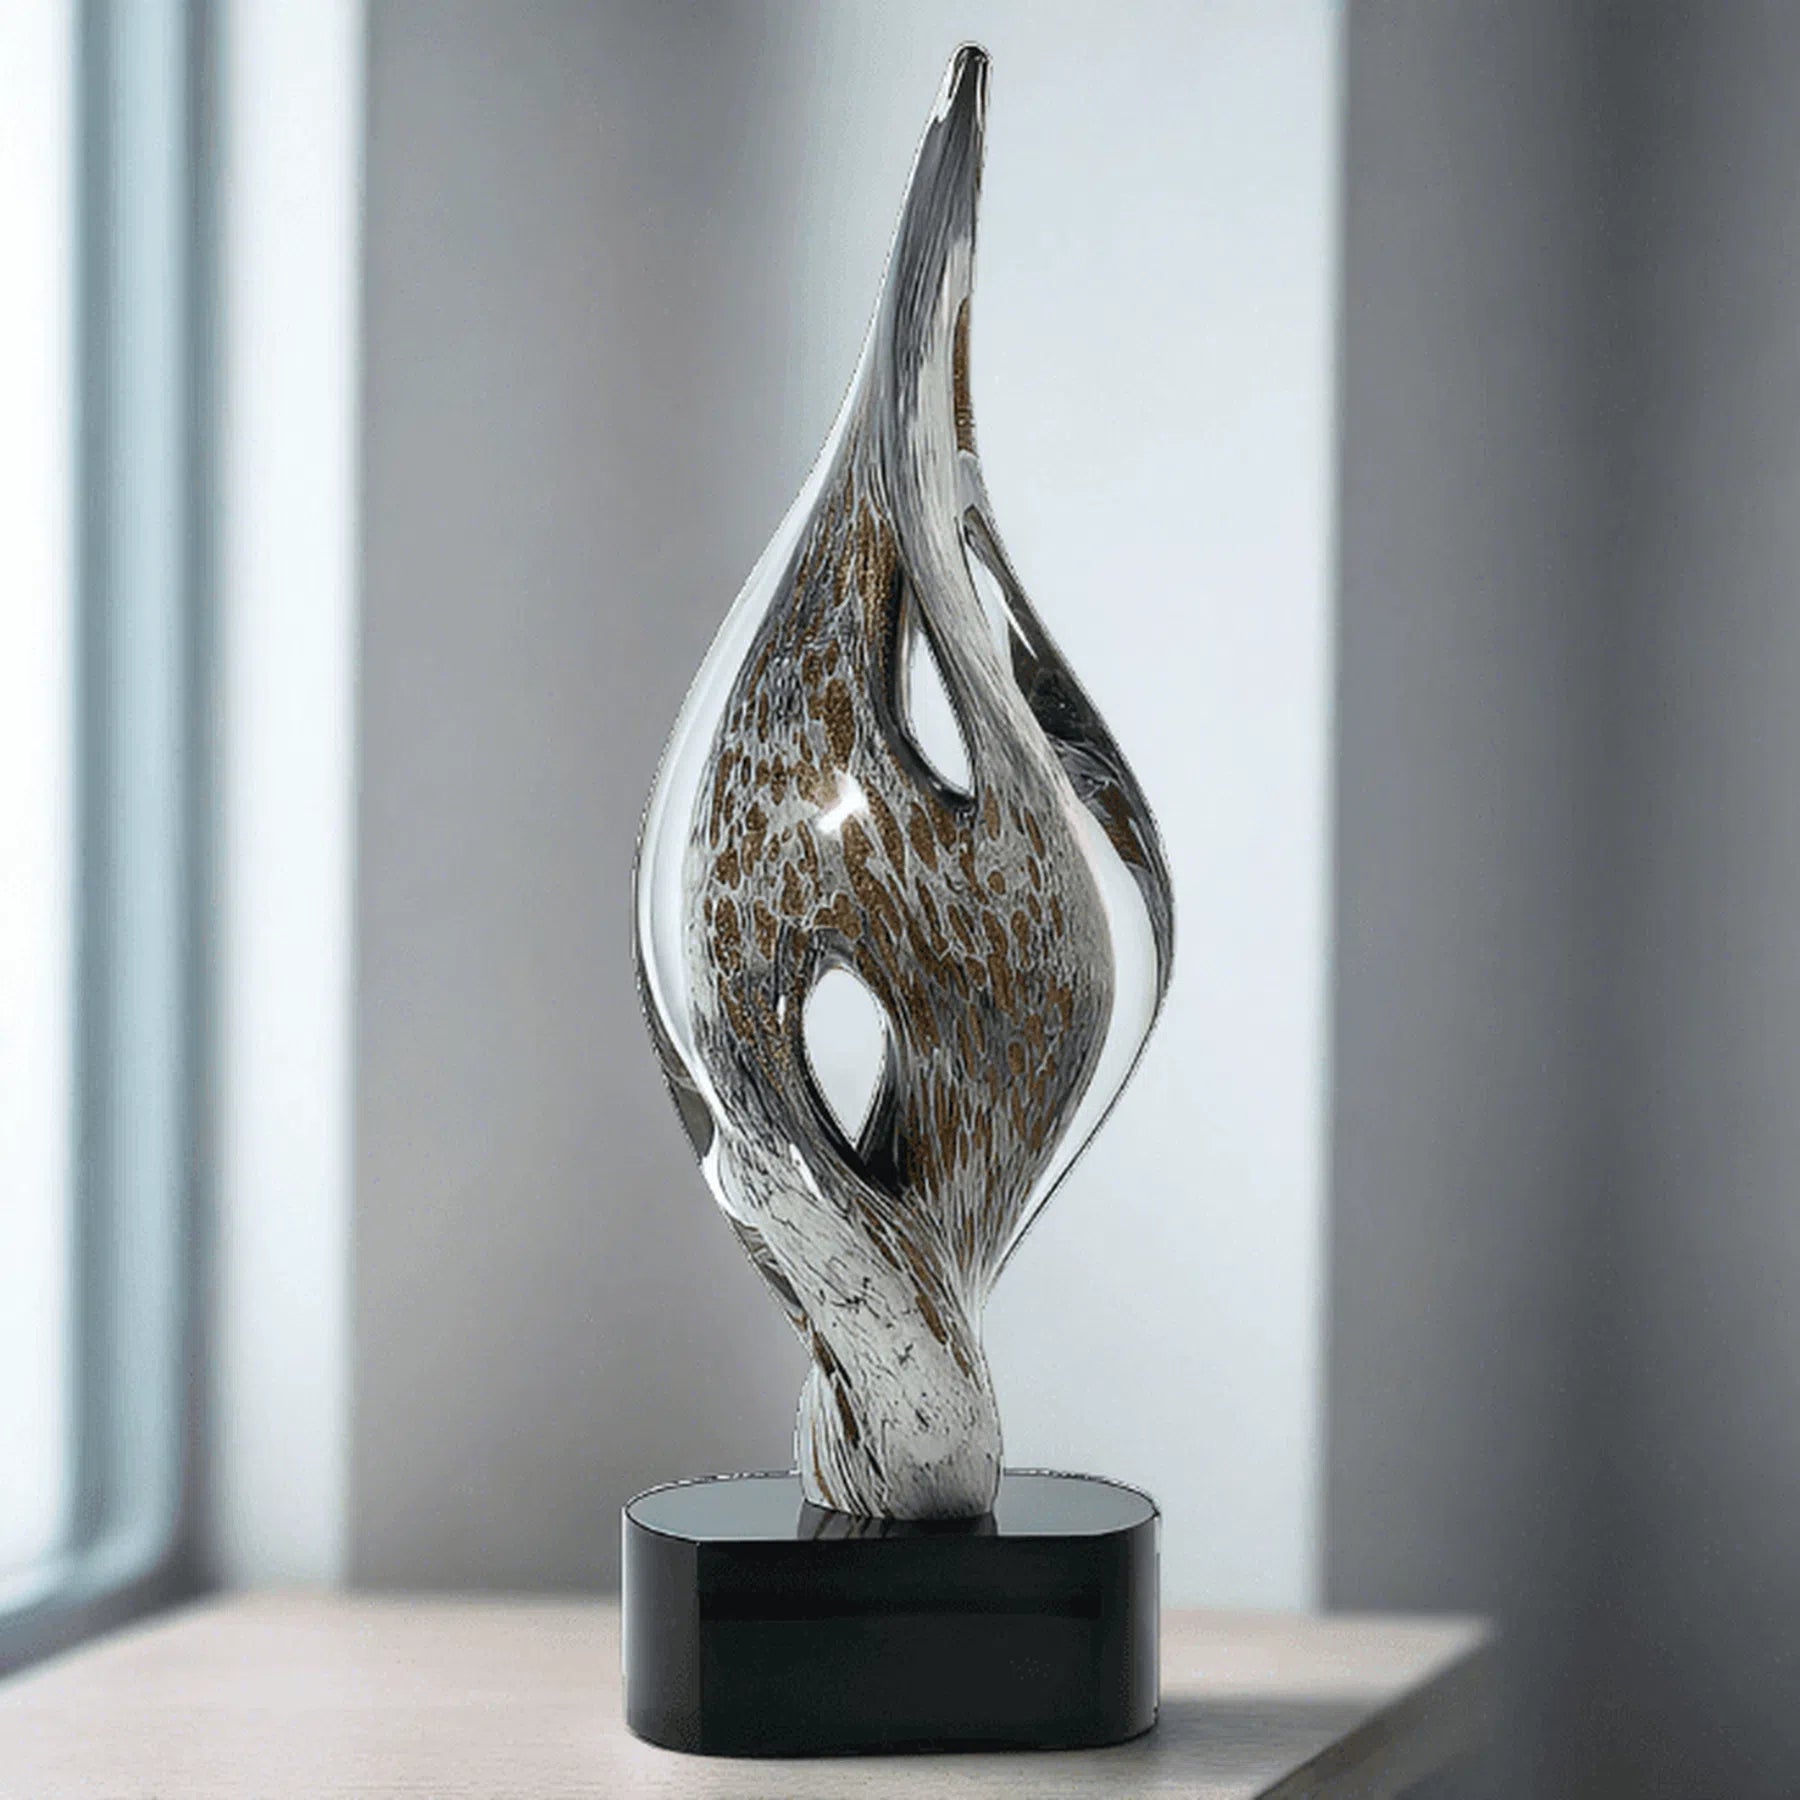 15" Spire Twist Art Glass Award Sculpture